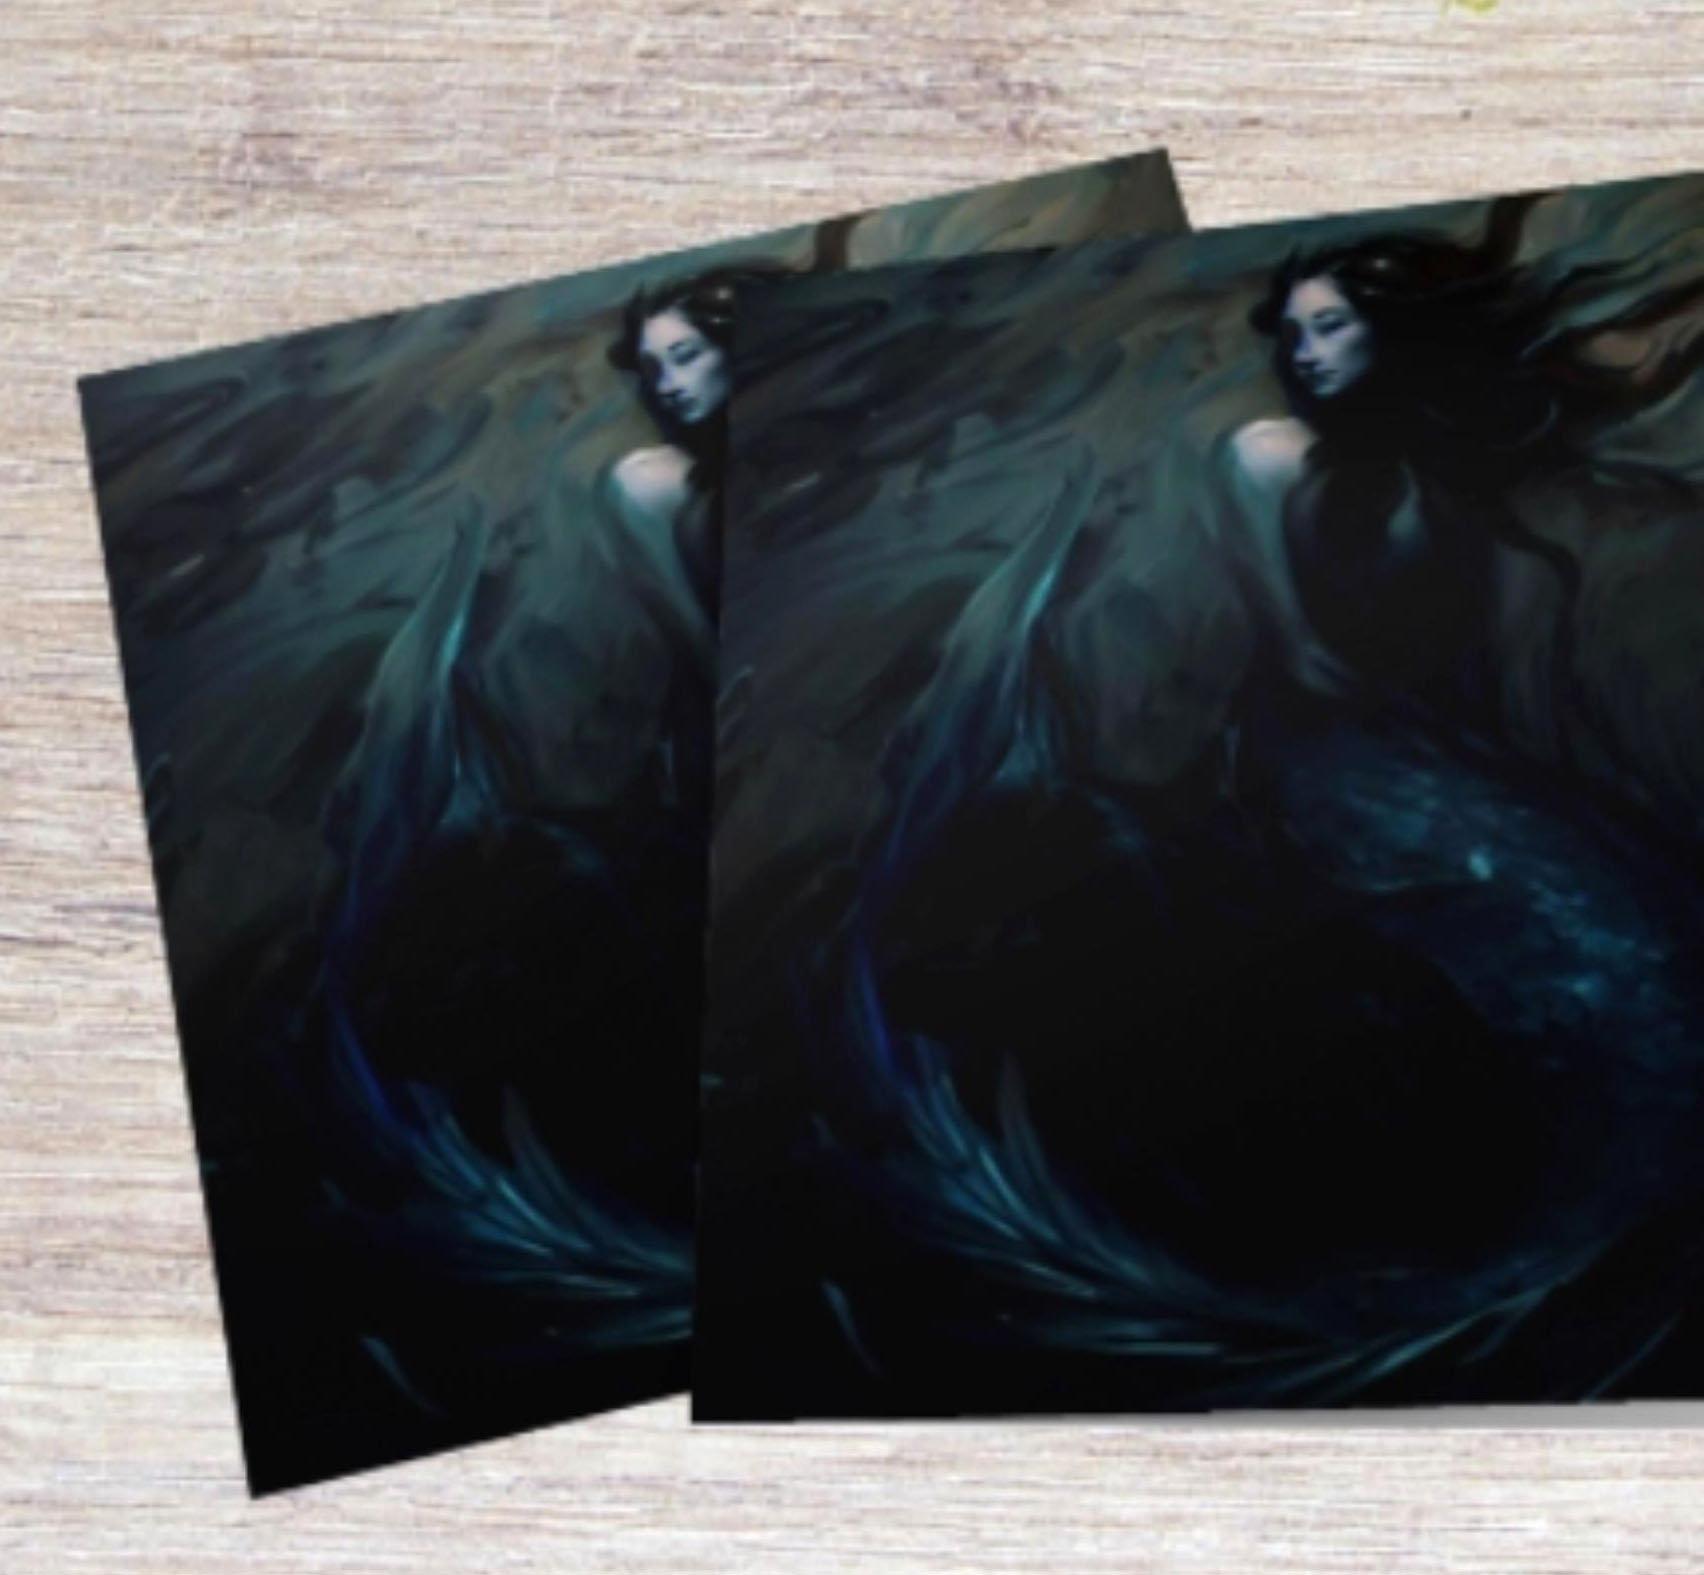 Mermaid Greeting Cards, Set of 5 Designs, Bulk Pack of Cards